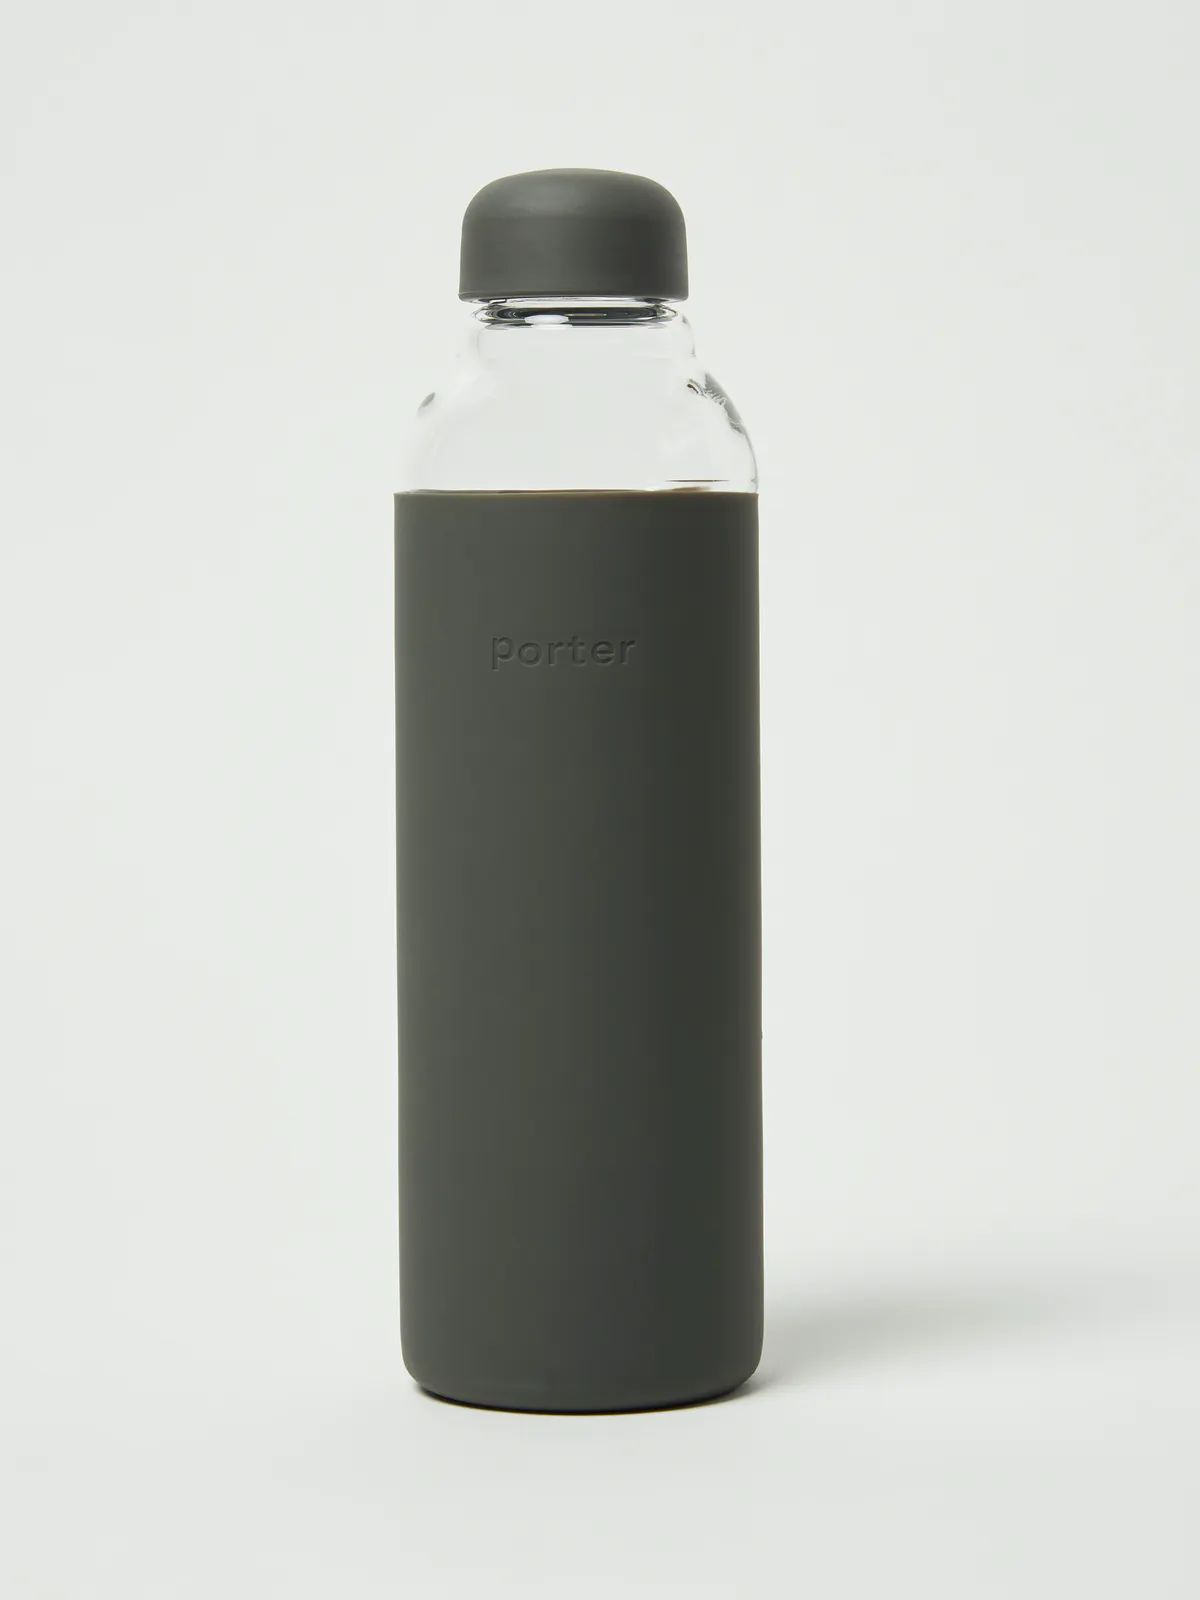 Porter Bottle | Verishop